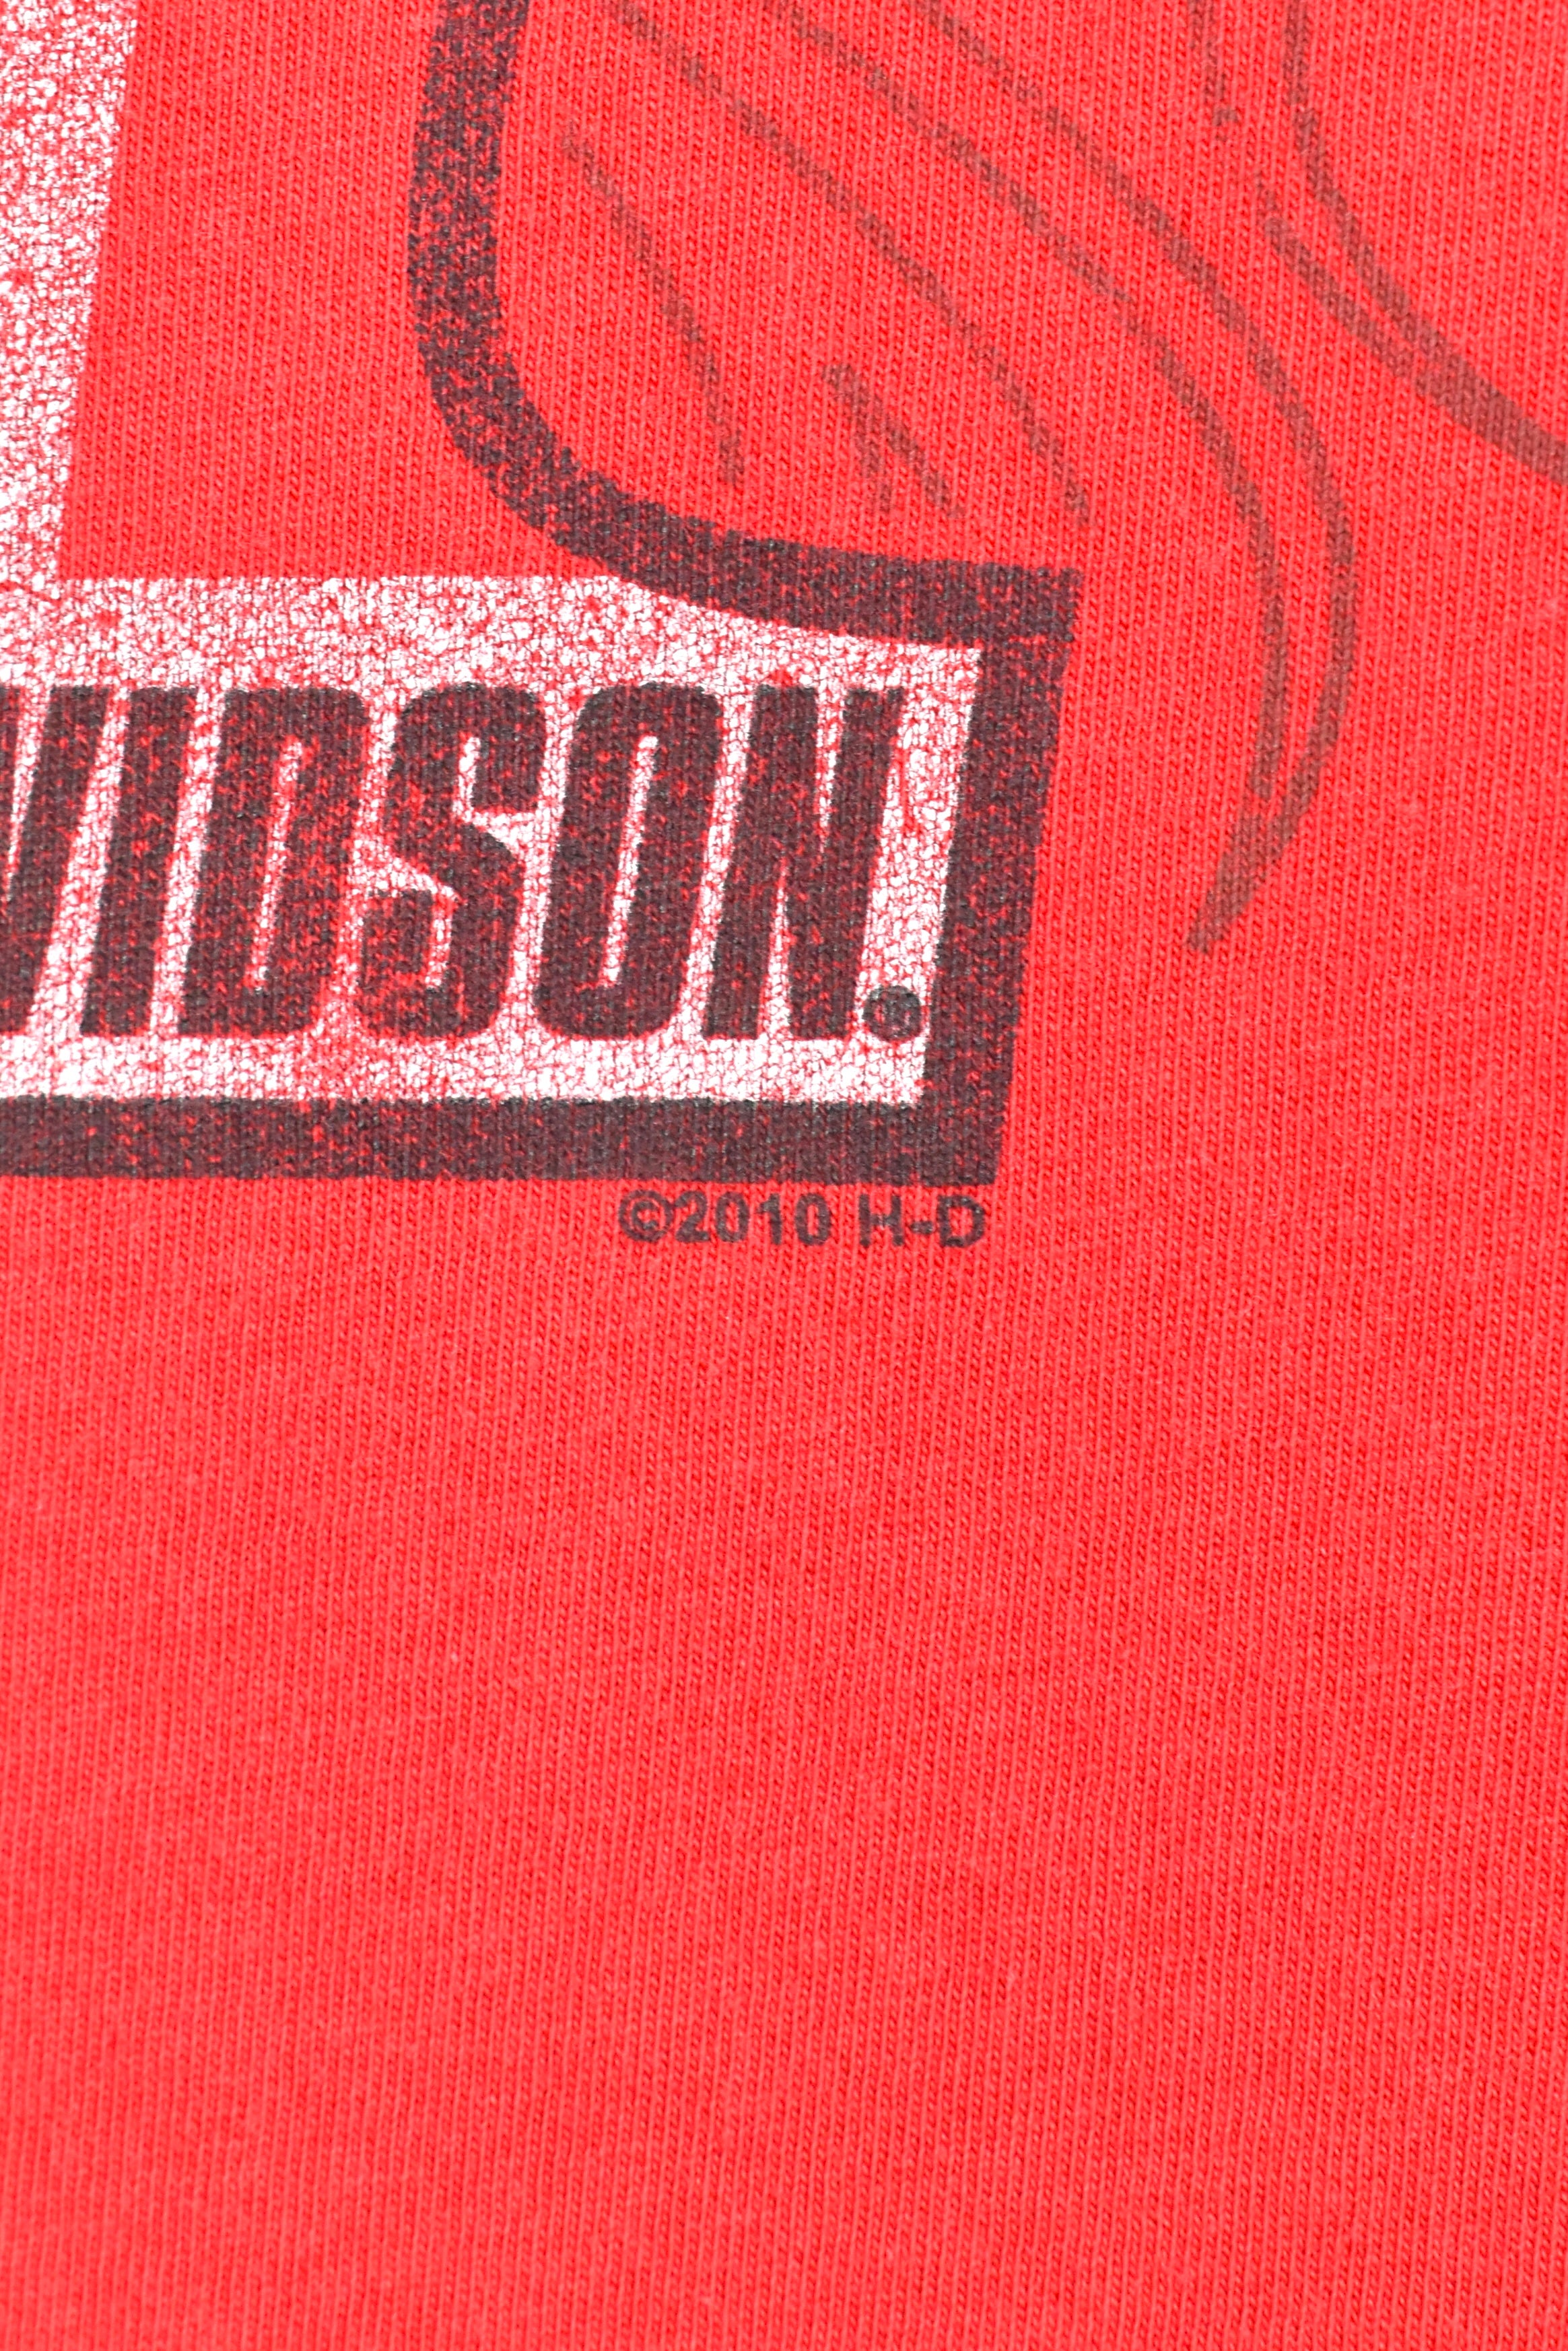 Modern Harley Davidson shirt, 2010 short sleeve graphic tee - medium, red HARLEY DAVIDSON